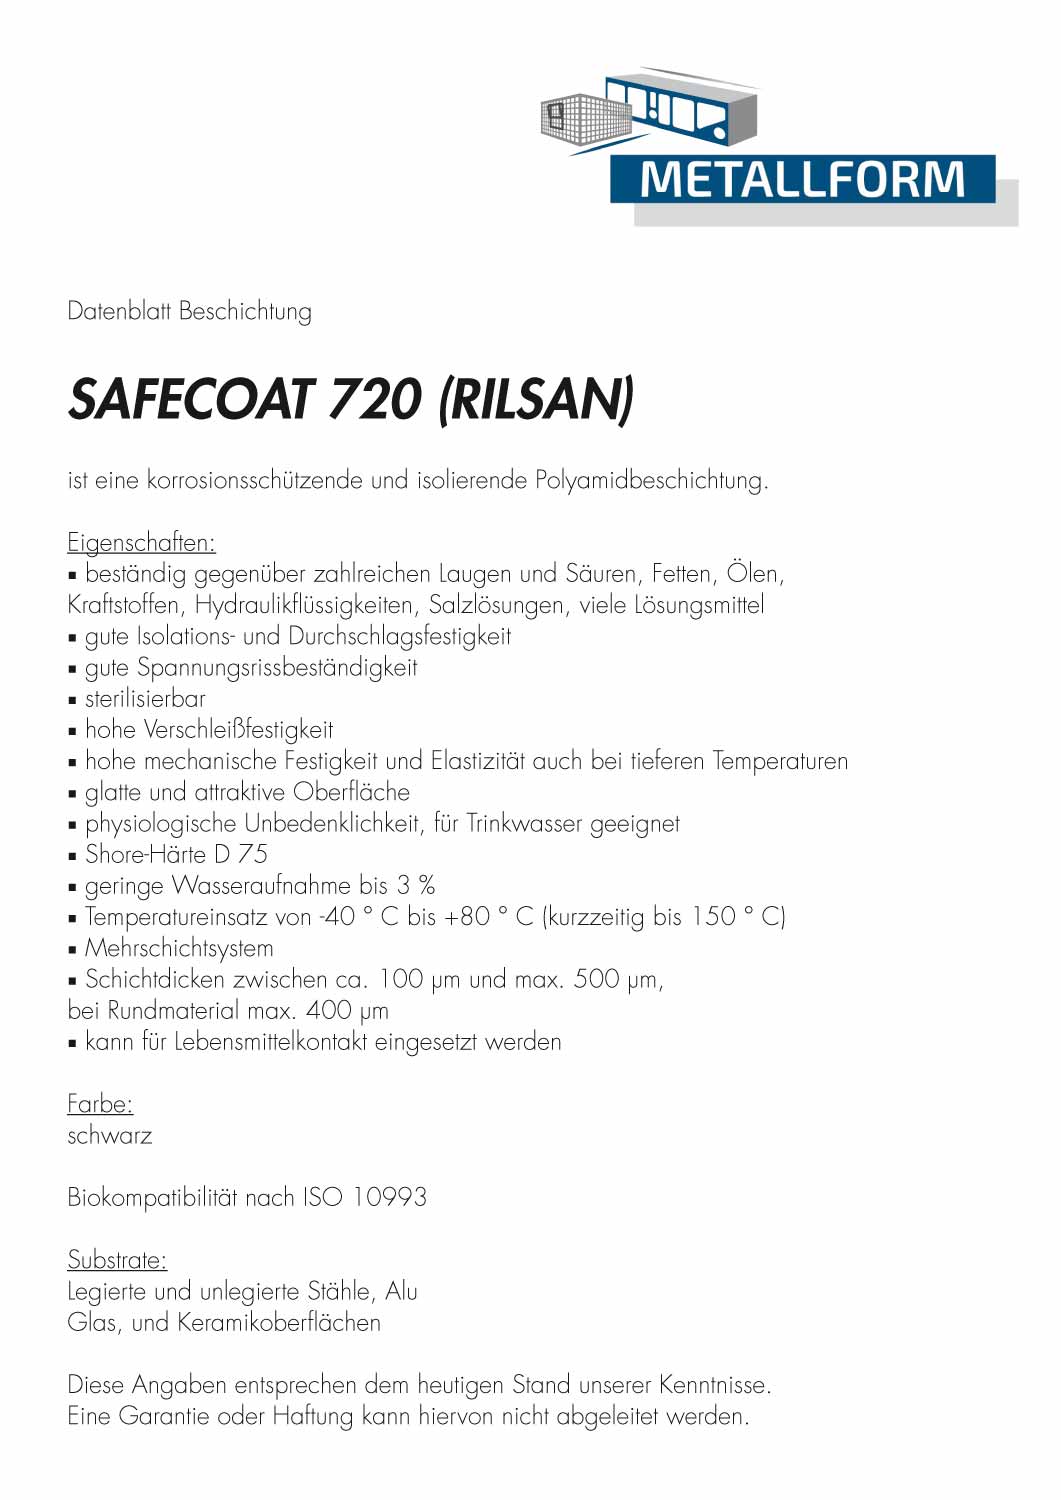 RILSAN (SAFECOAT 720)